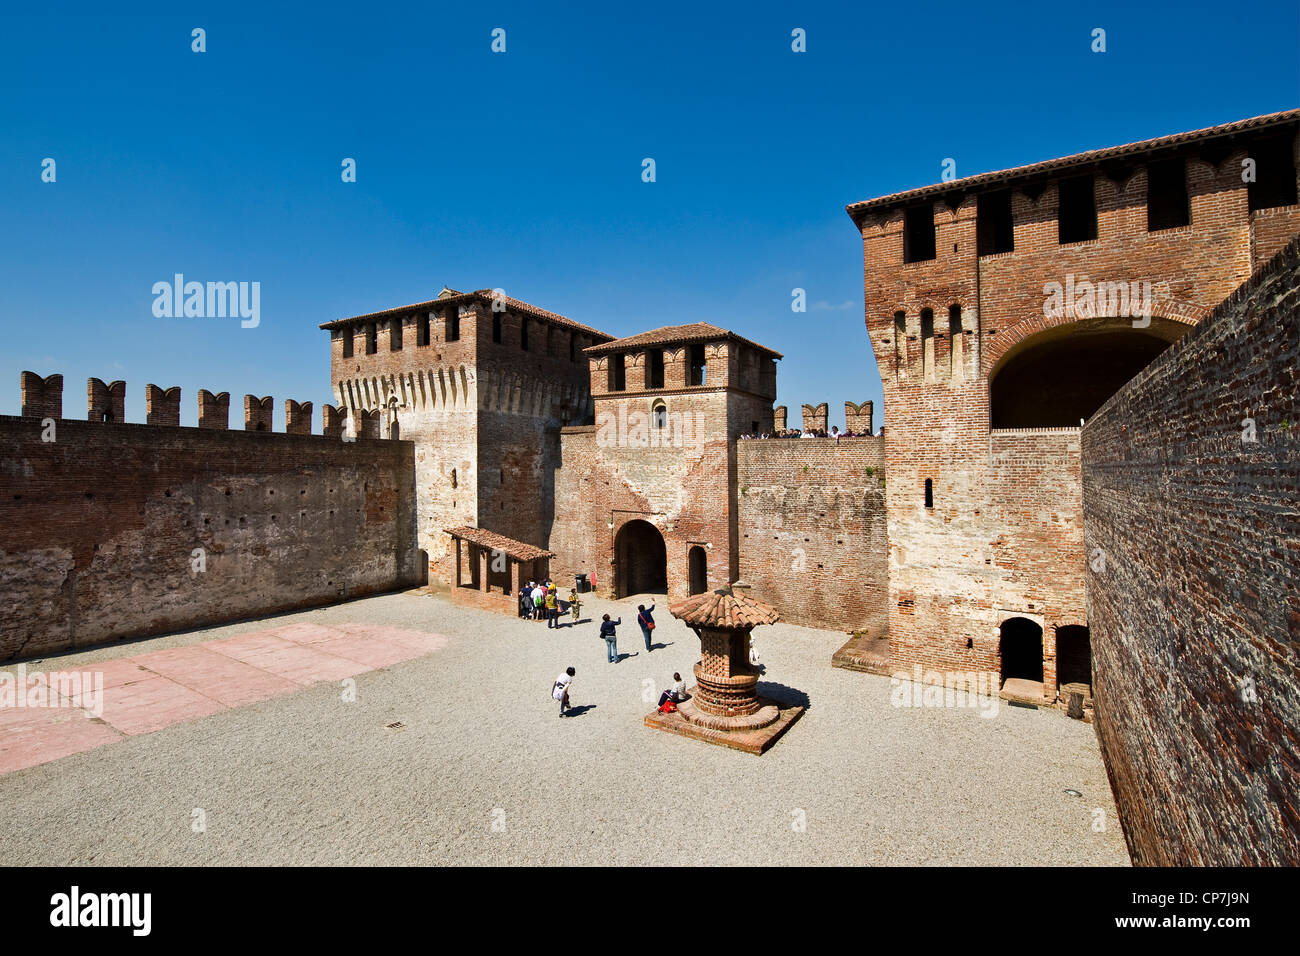 Italy, Lombardy, Soncino, Sforza castle Stock Photo